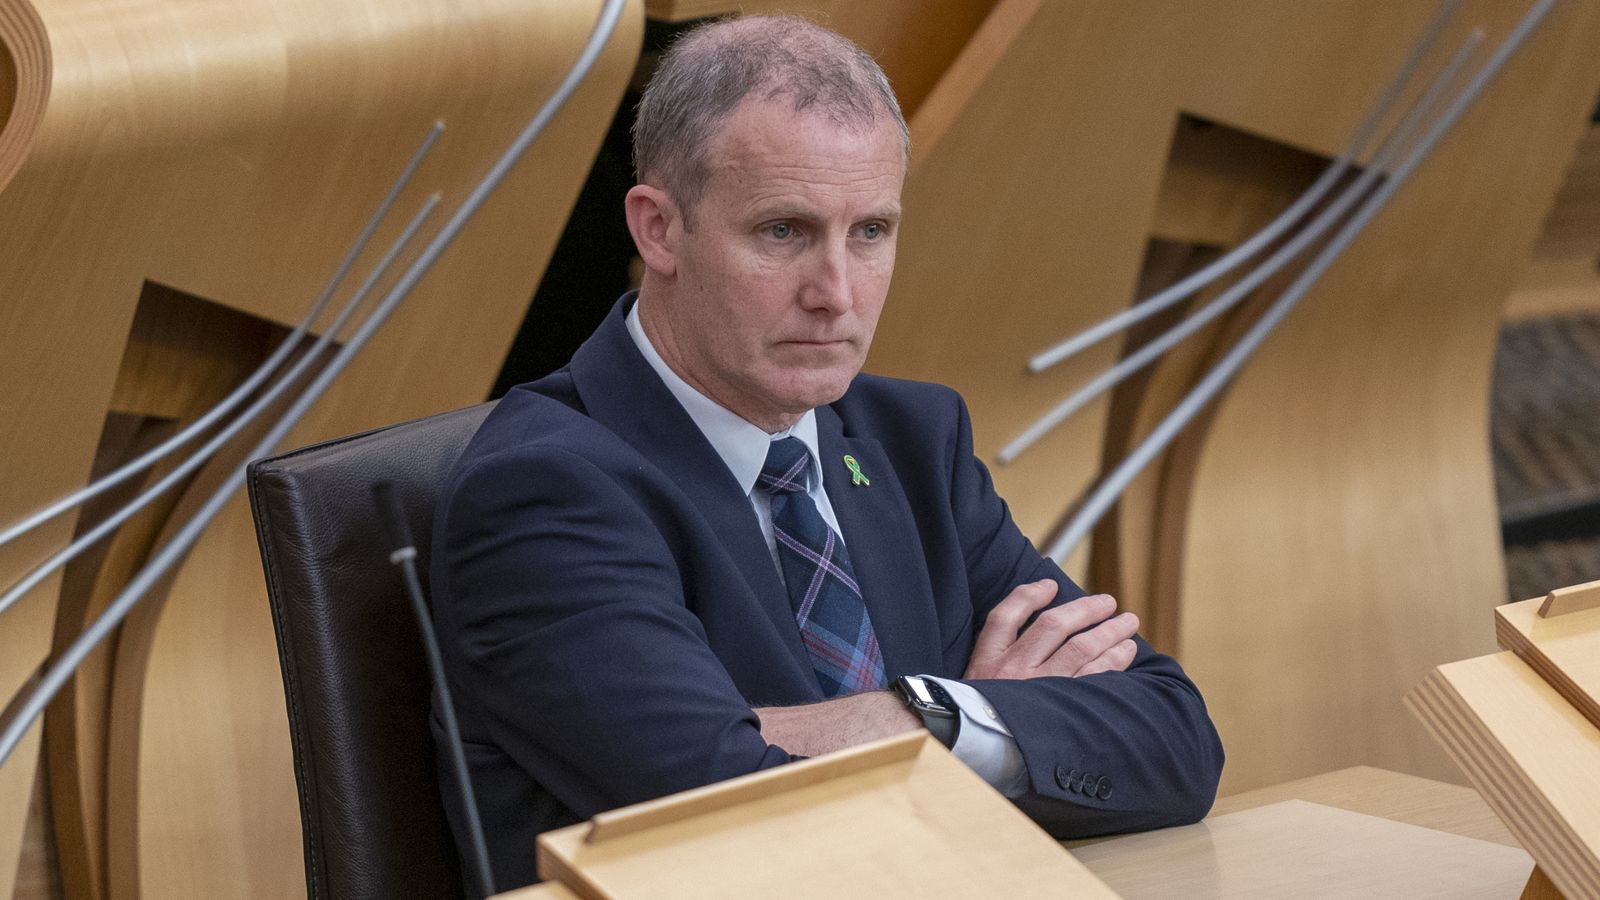 SNP MSP Michael Matheson faces suspension from Scottish parliament over £11,000 iPad bill